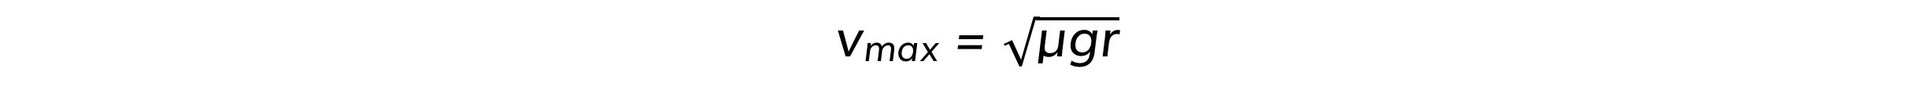 6.1.4-Equation-2